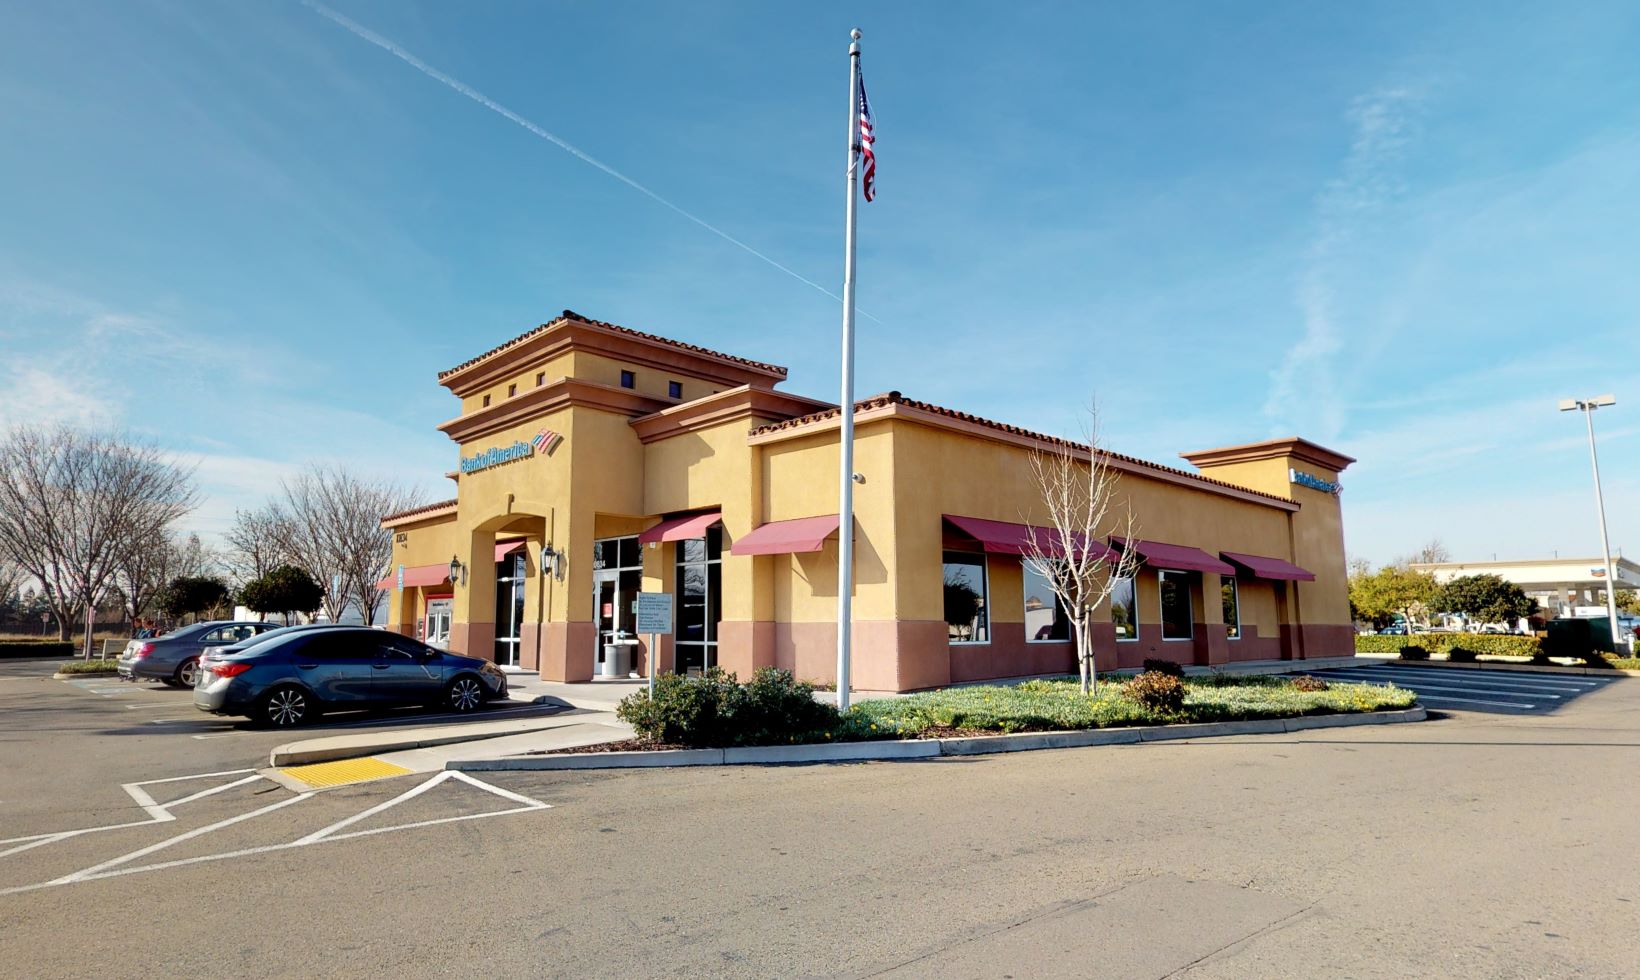 Bank of America financial center with drive-thru ATM | 10834 Trinity Pkwy, Stockton, CA 95219